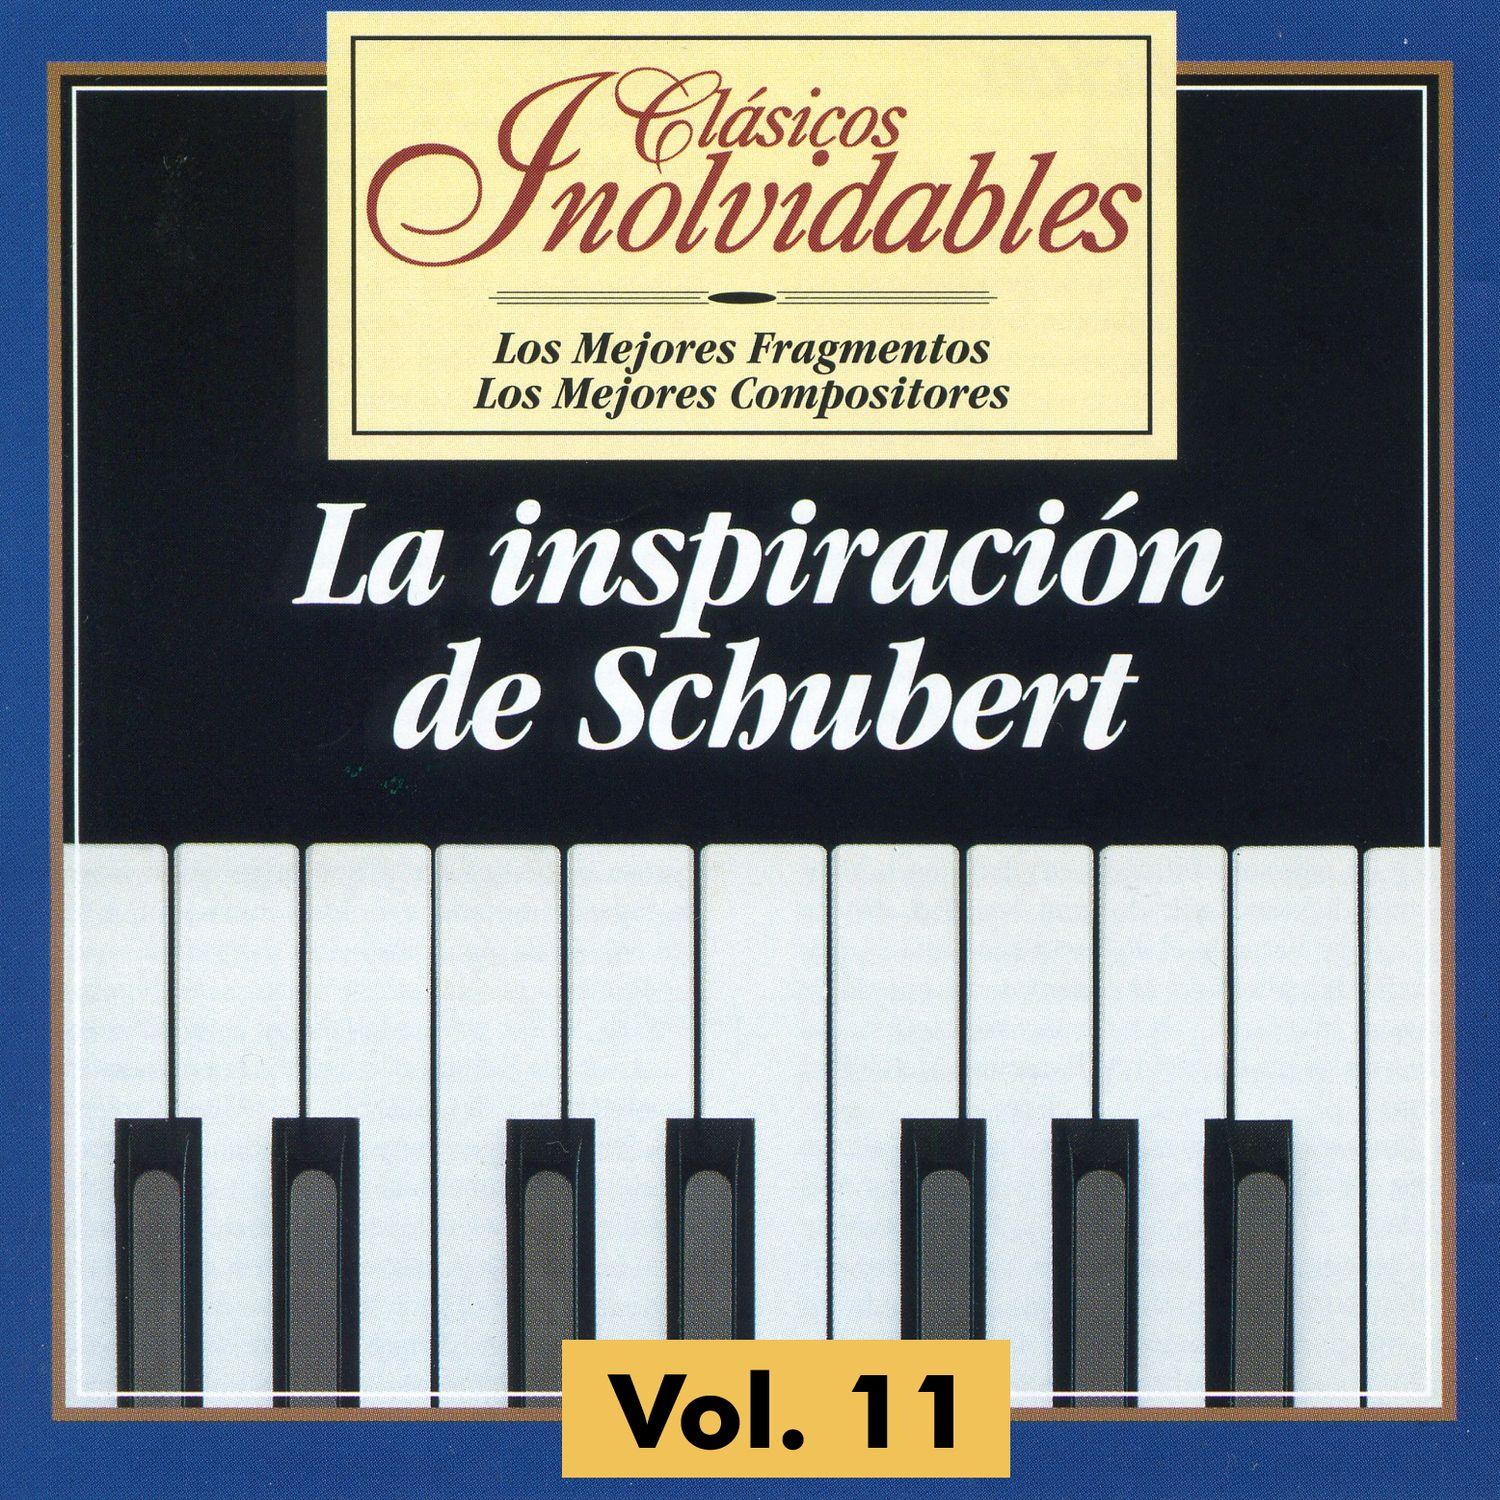 Sonatina for Violin and Piano No. 1 in D Major D. 384: III. Allegro vivace